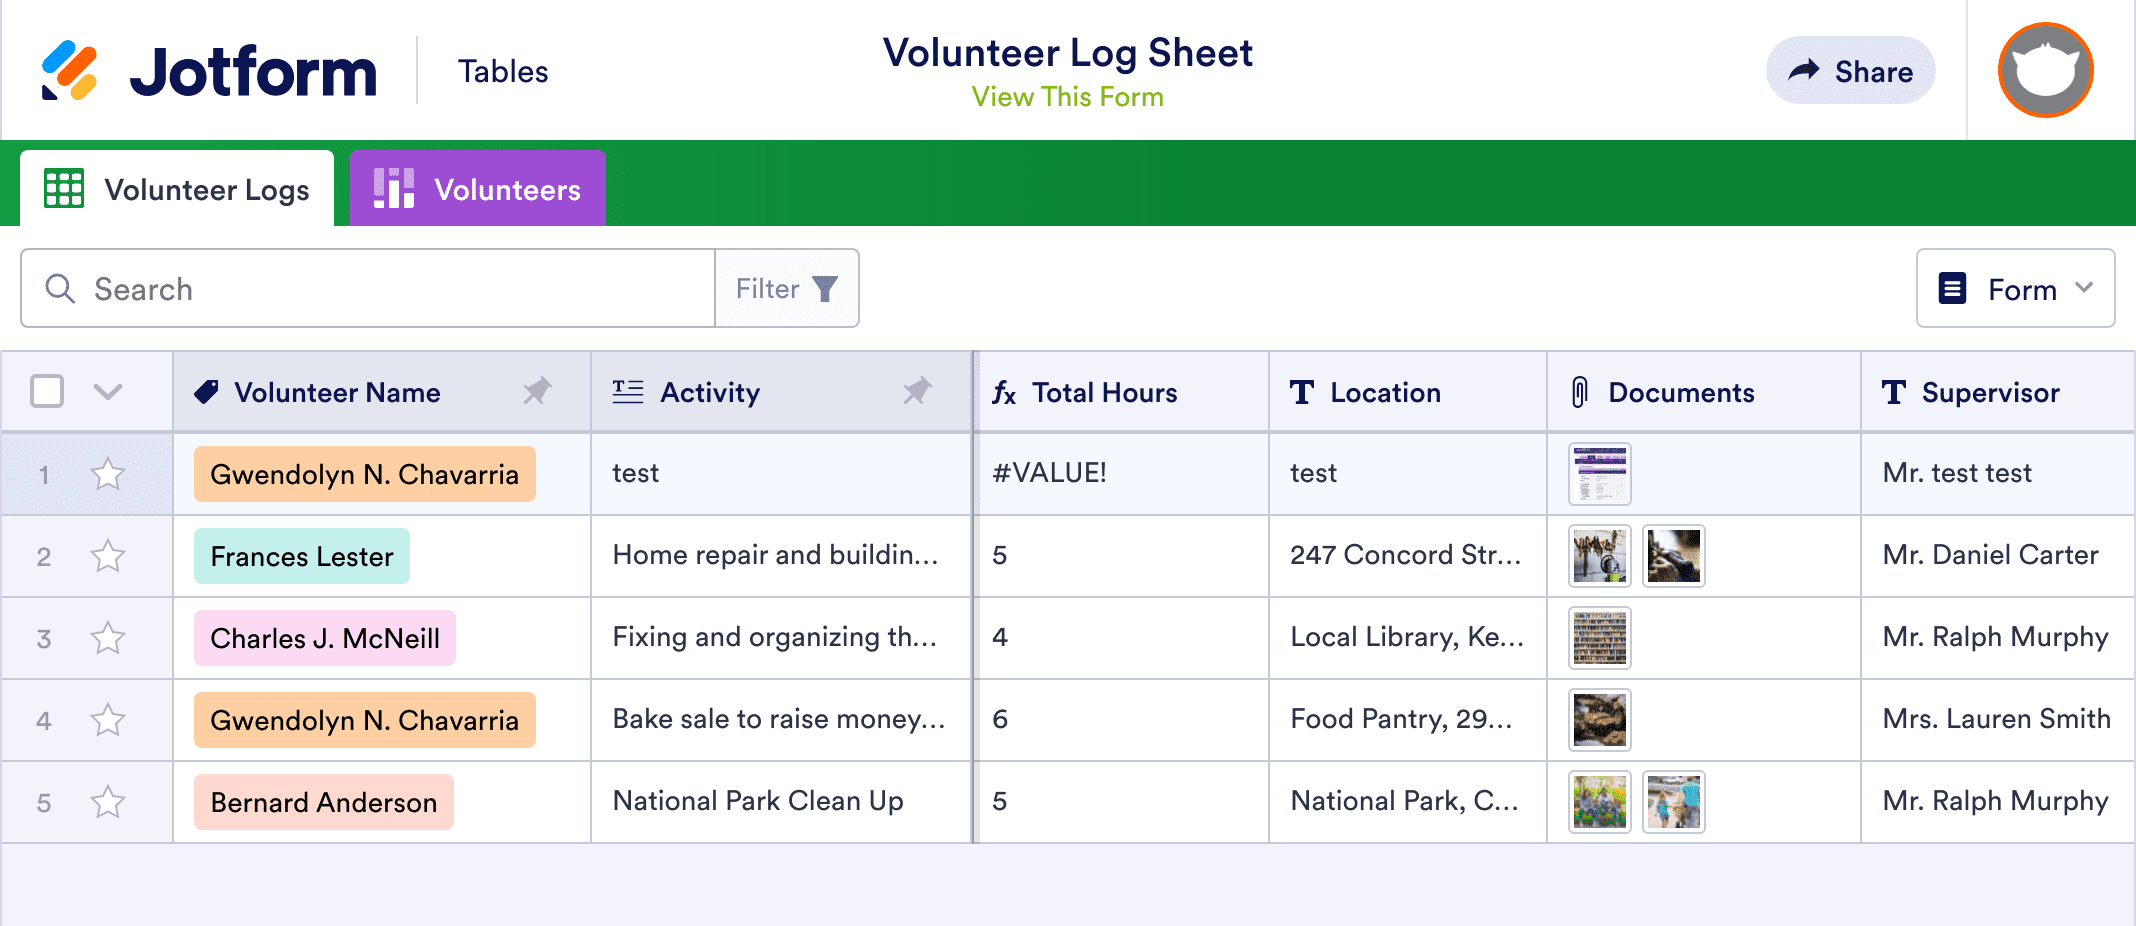 Volunteer Log Sheet Template | Jotform Tables